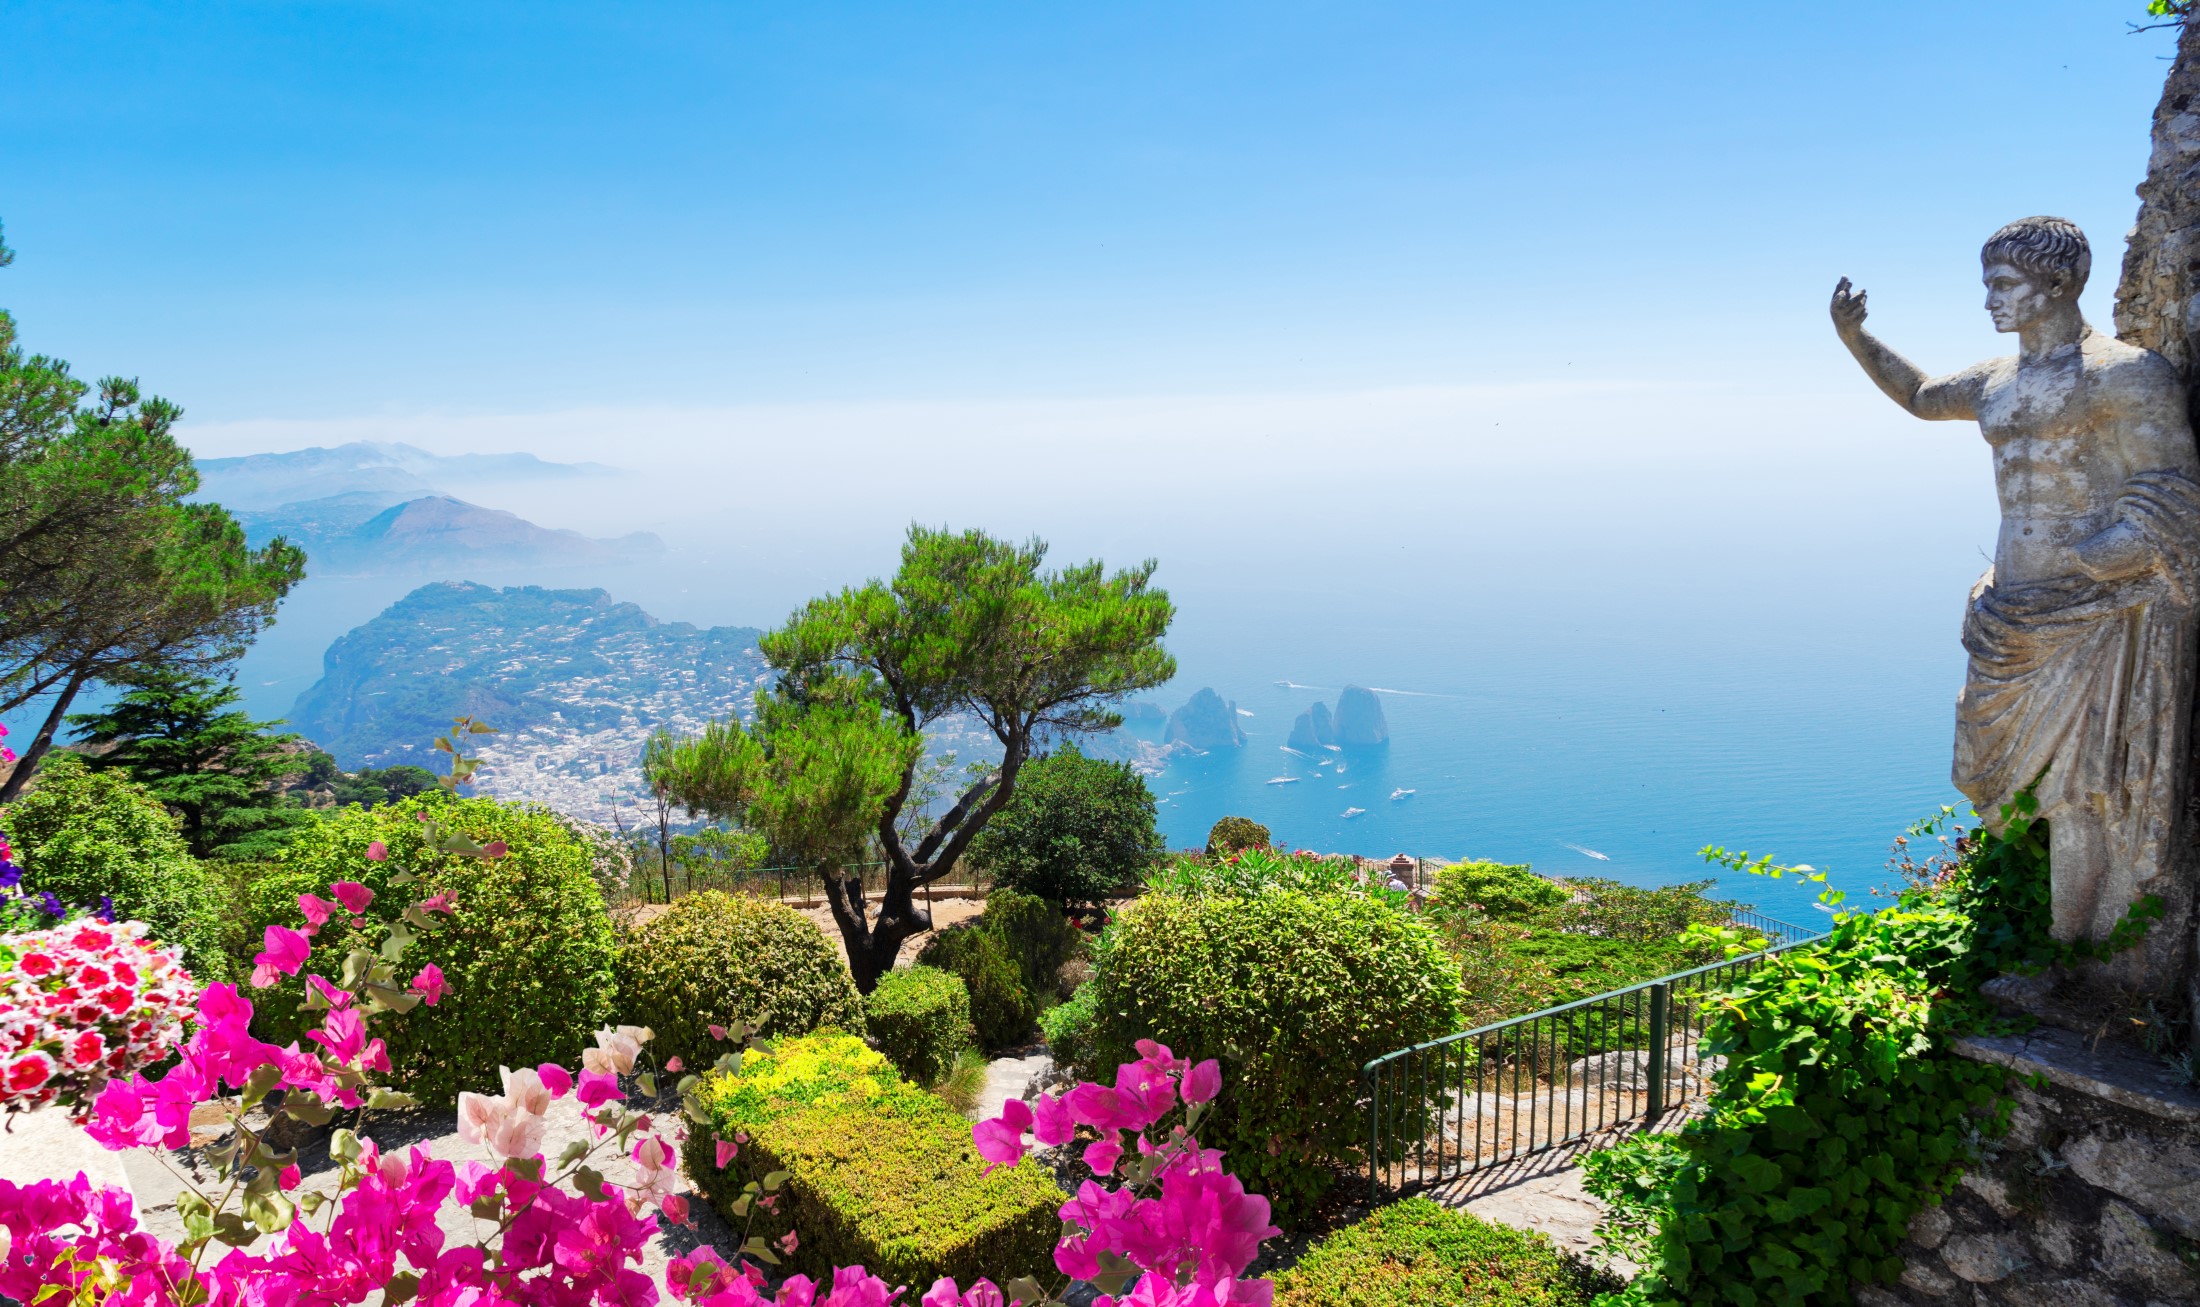 Capri atrakcje, View of sea and garden from mount Solaro of Capri island, Italy, web banner with flowers